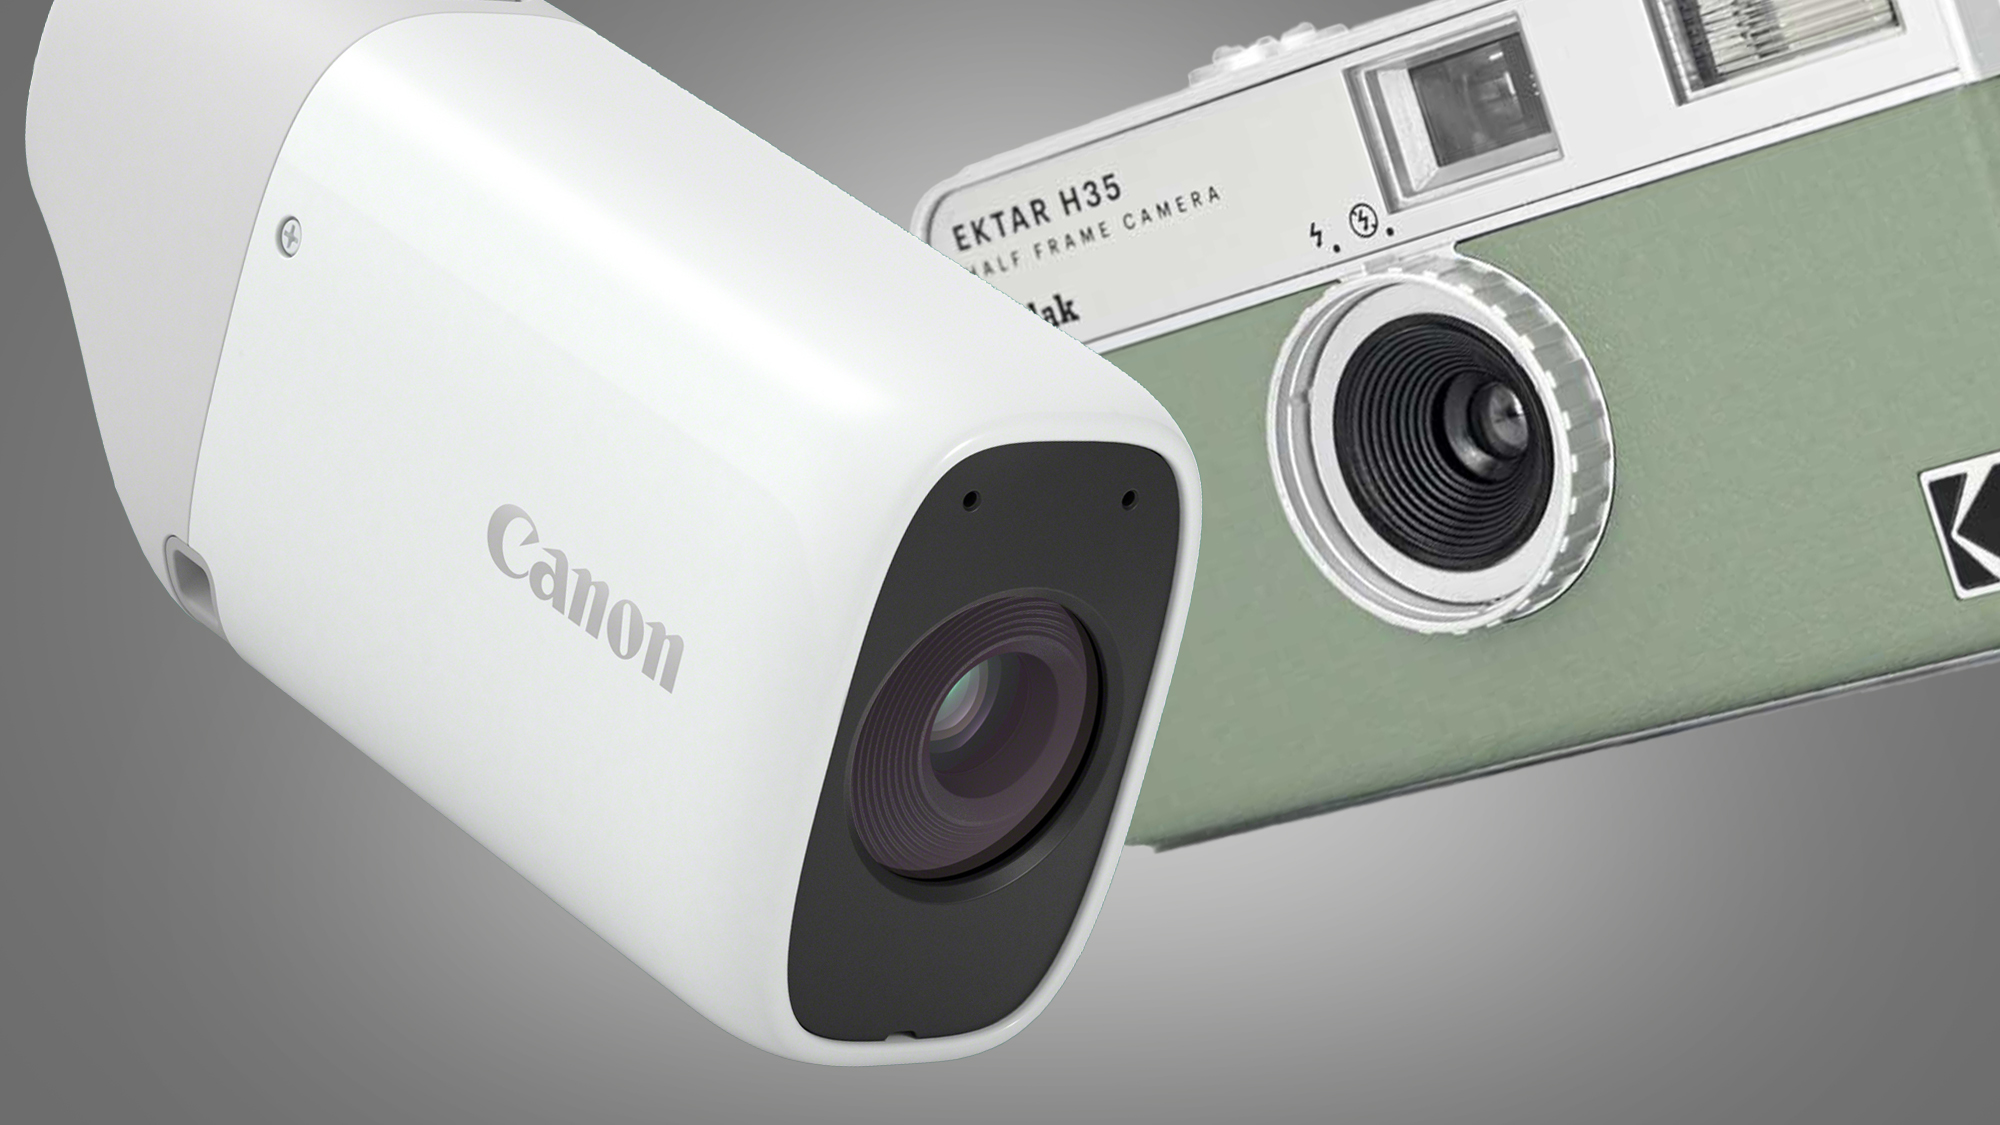 Canon PowerShot Zoom and Kodak Ektar H35 compact cameras on a gray background